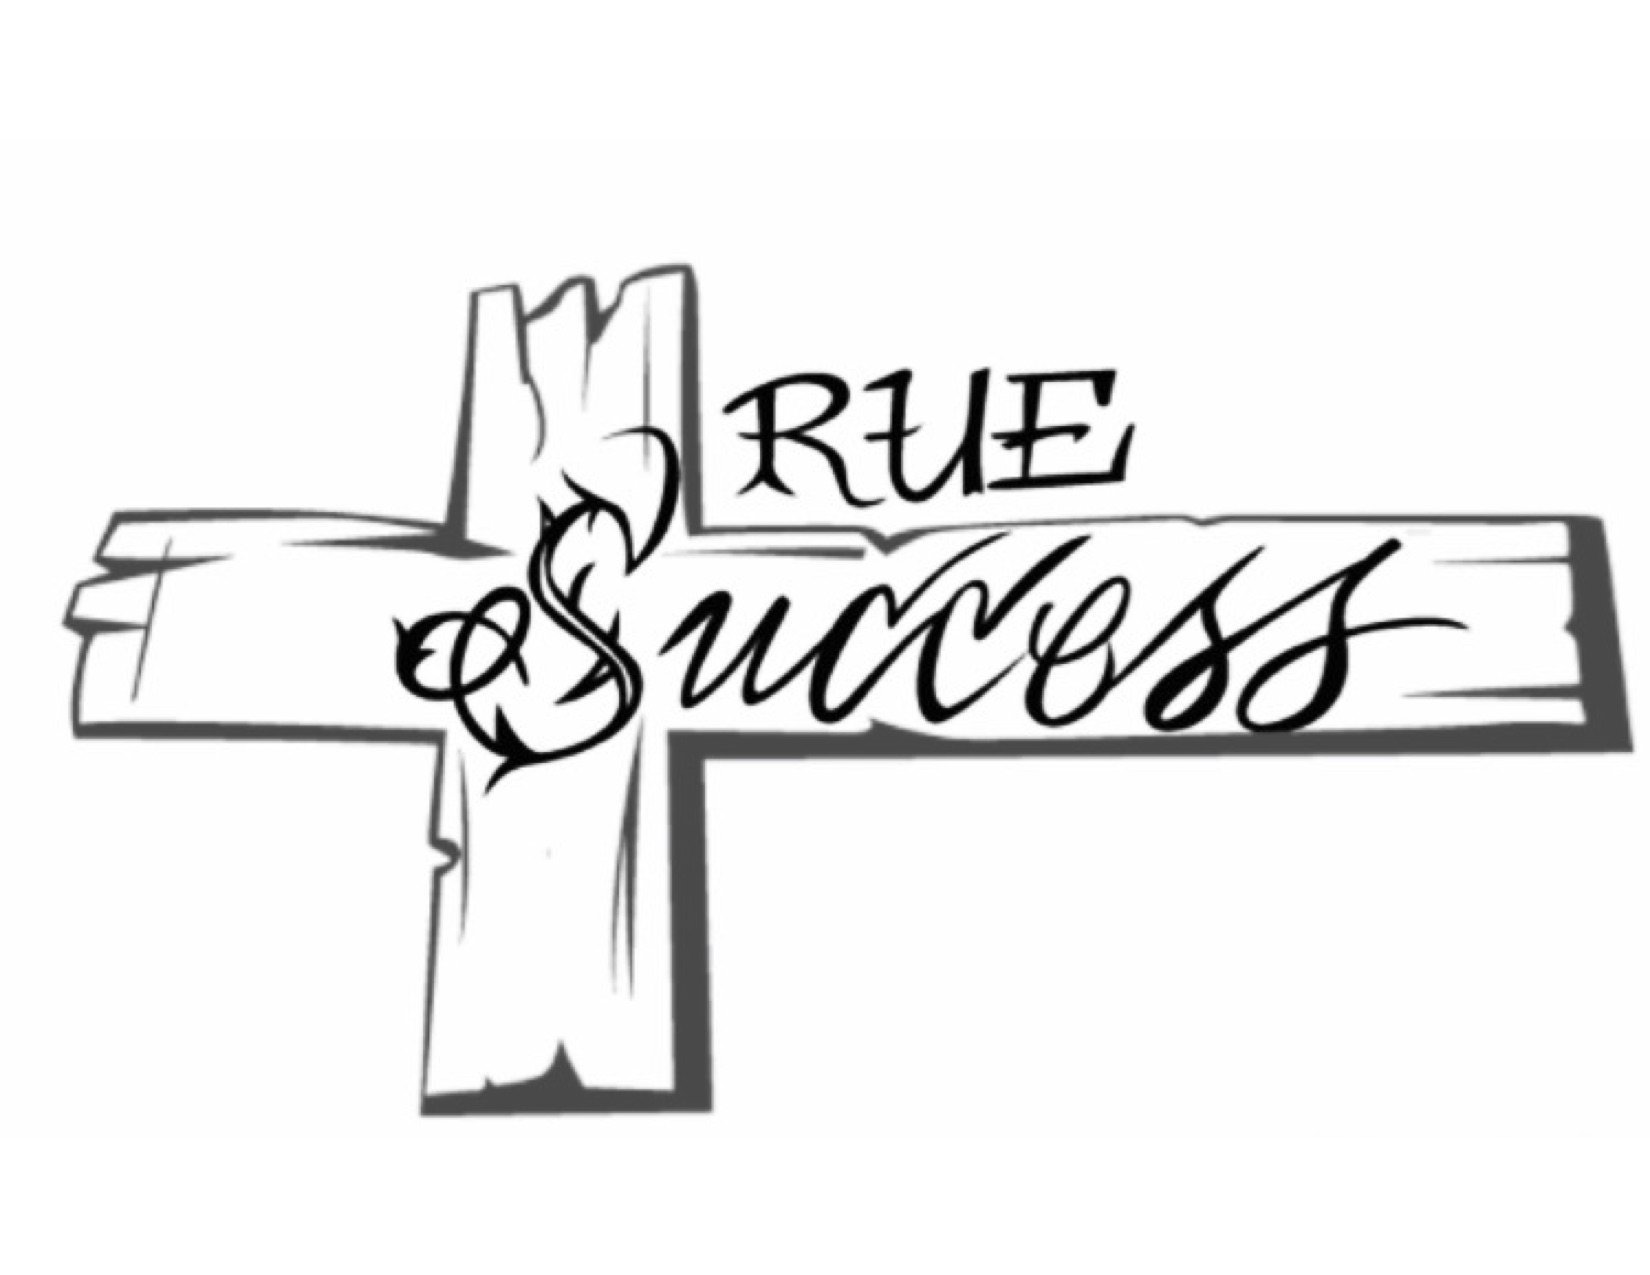  RUE SUCCESS